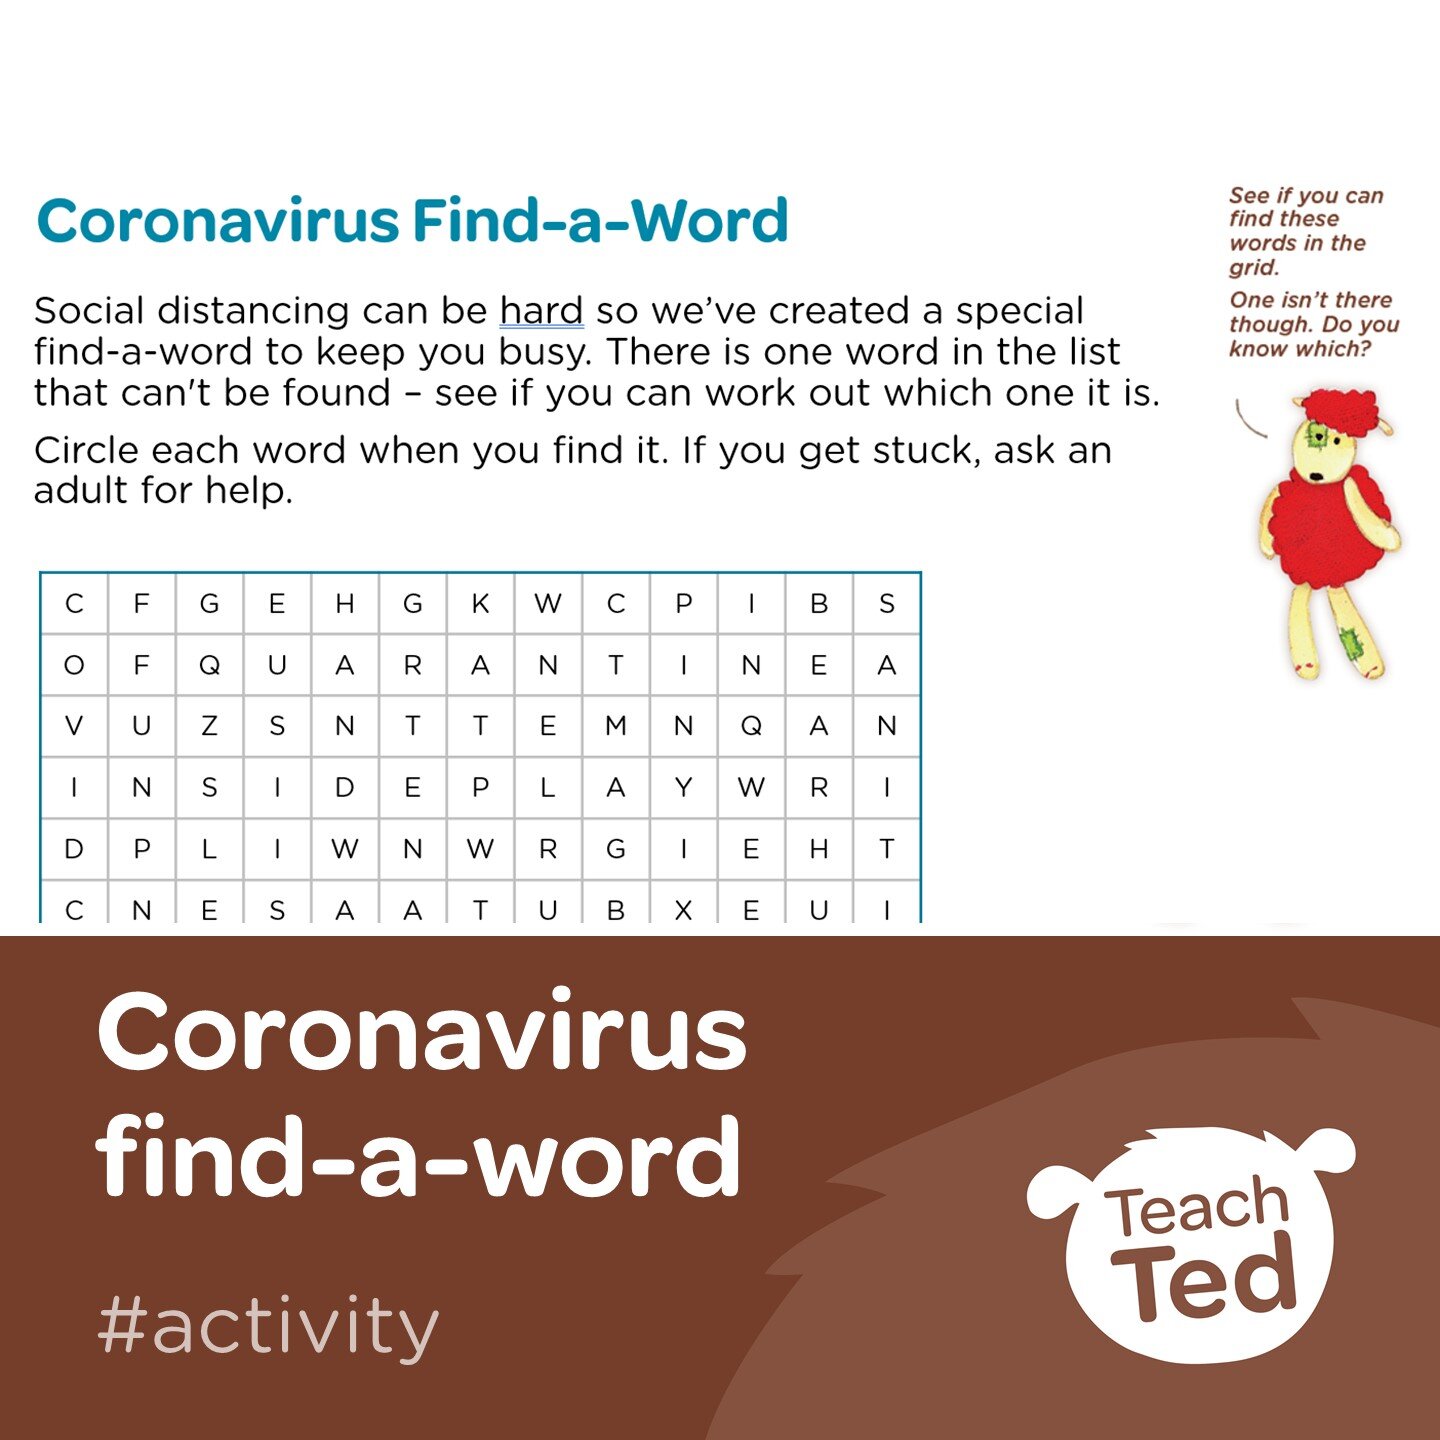 Coronavirus find-a-word